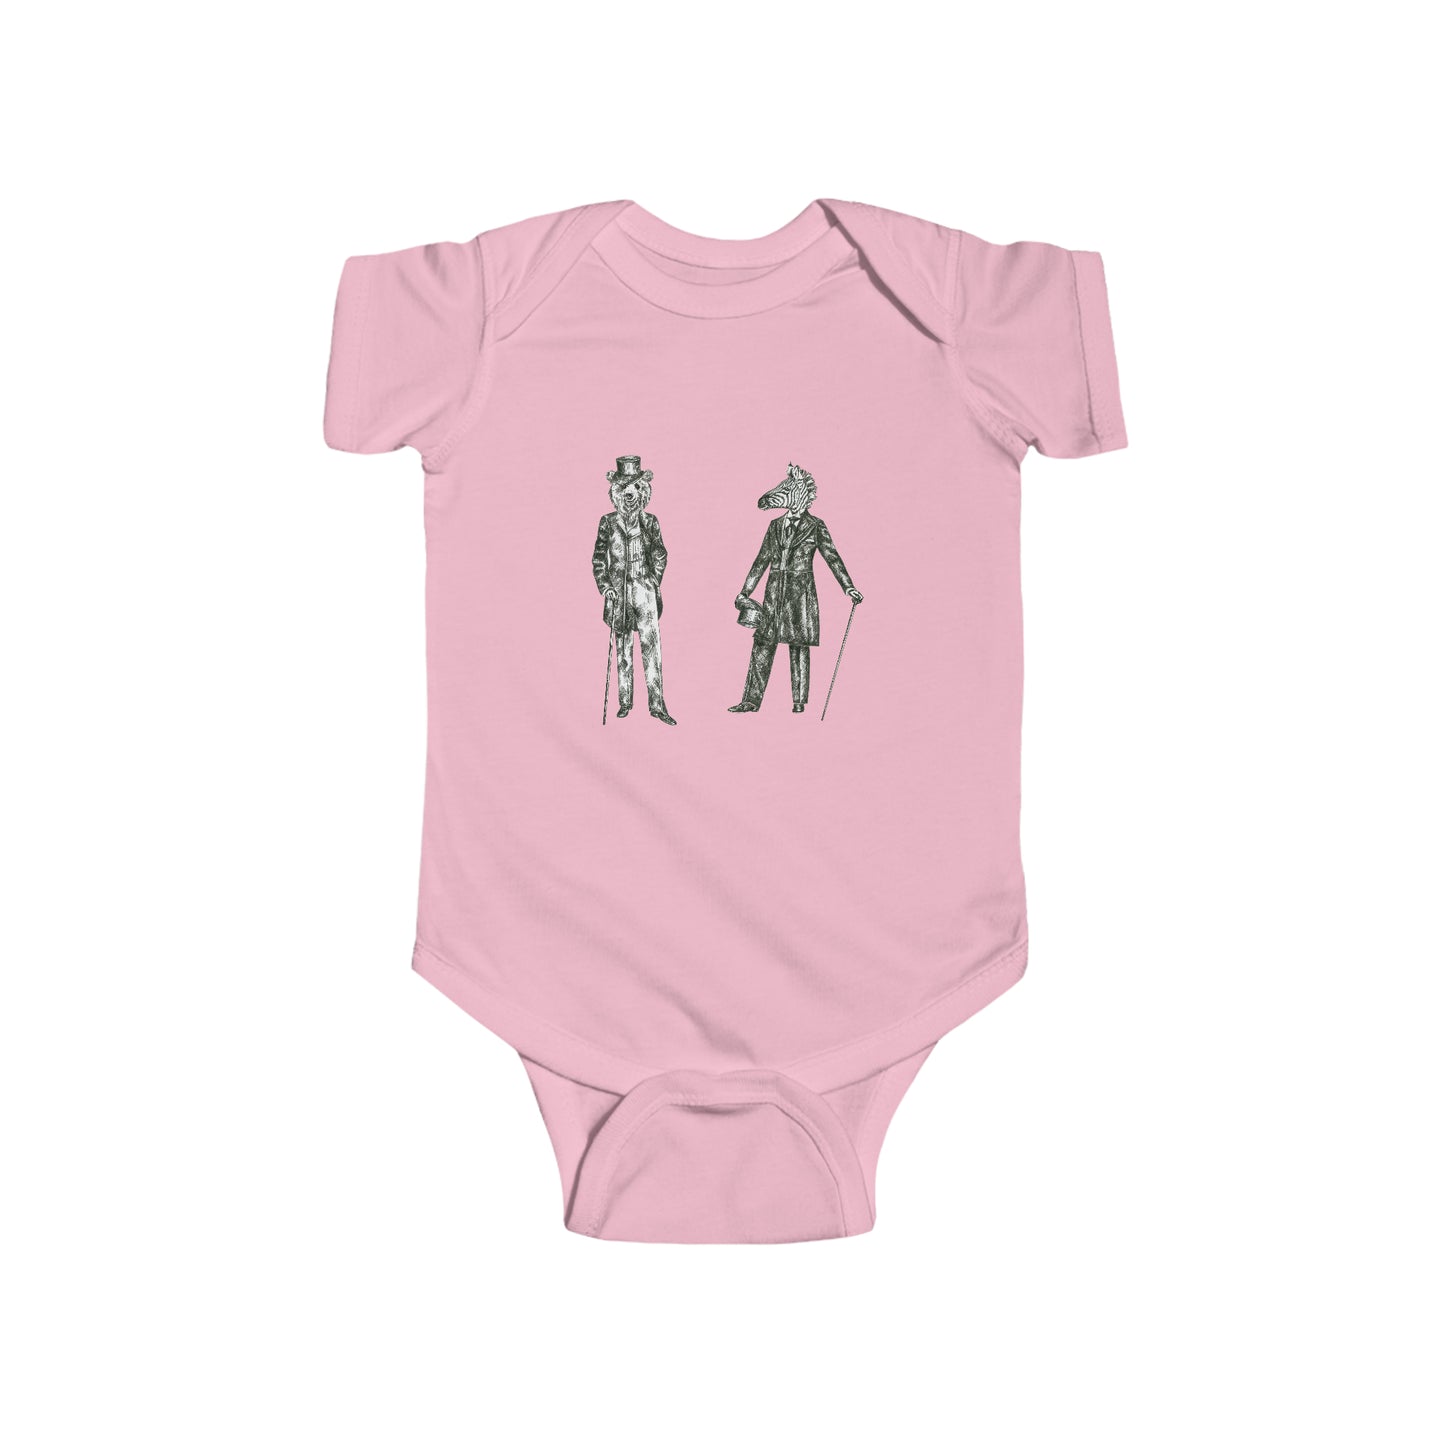 Infant Baby Chatting Graphic Jersey Bodysuit Onesie